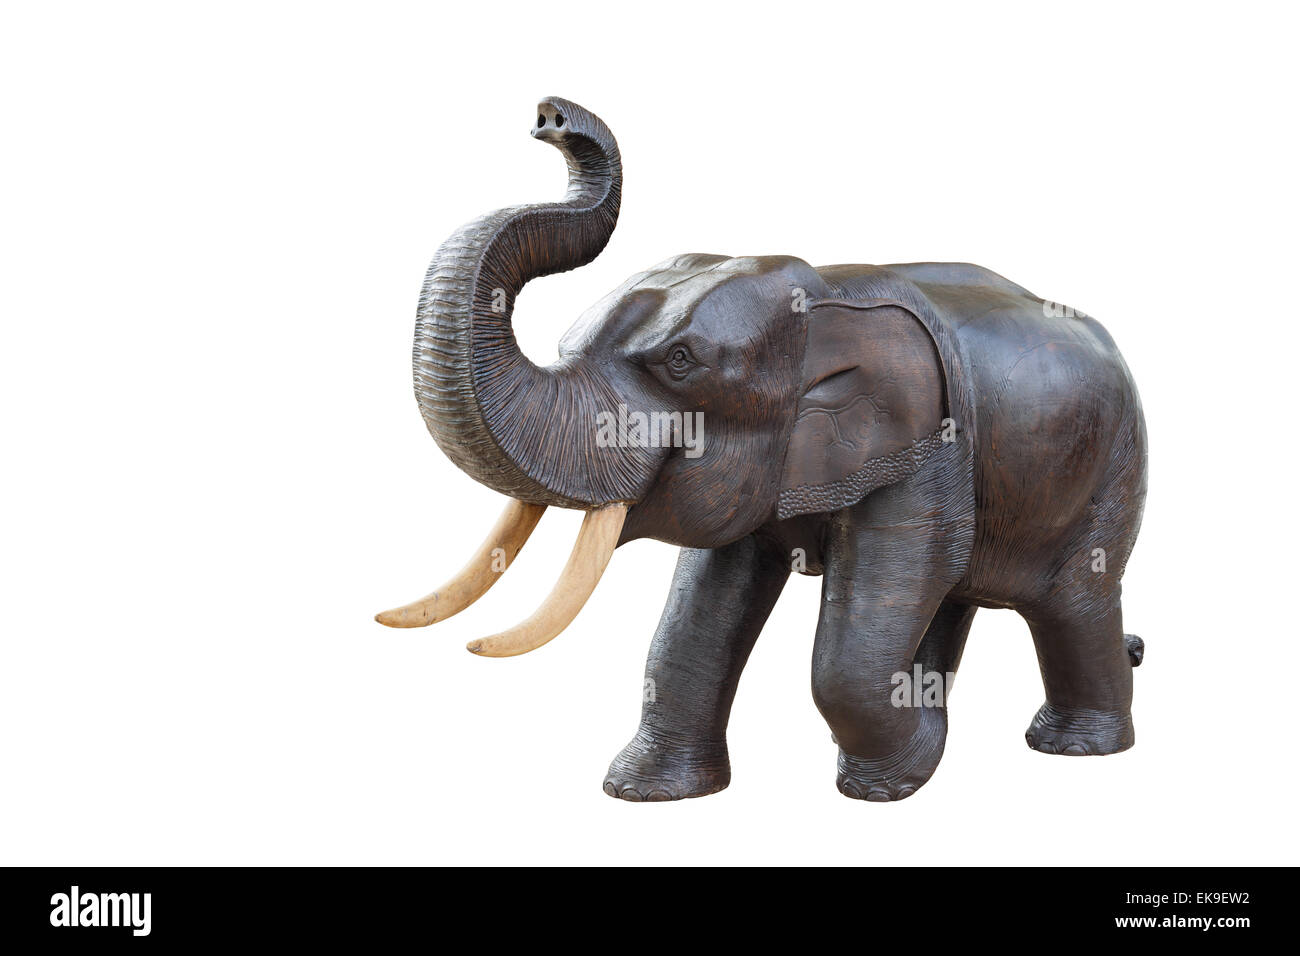 handcraft wood elephant sculpture isolated on white background Stock Photo